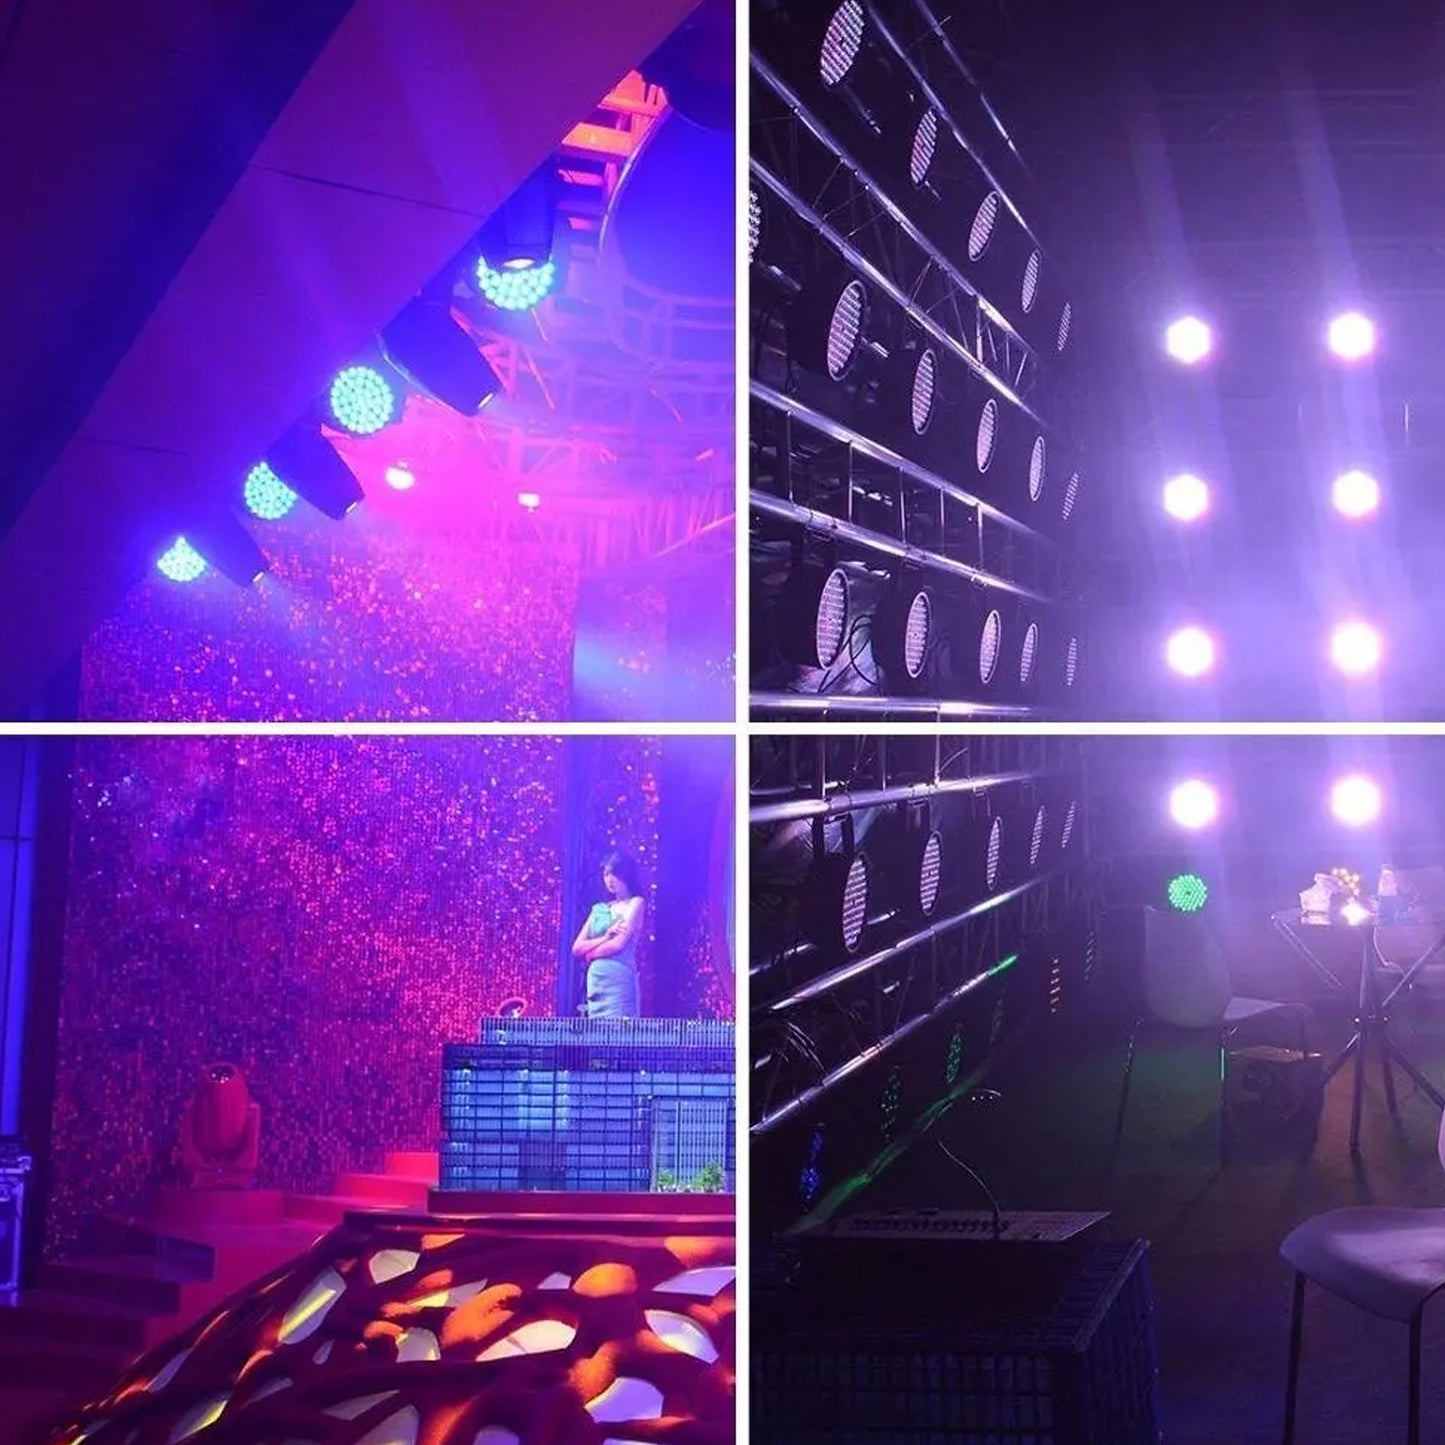 60 LED Par Light, DMX Control DJ Lighting, Disco Party Light, LED Stage Lighting for Live Shows, Home Party, Wedding, Festivals